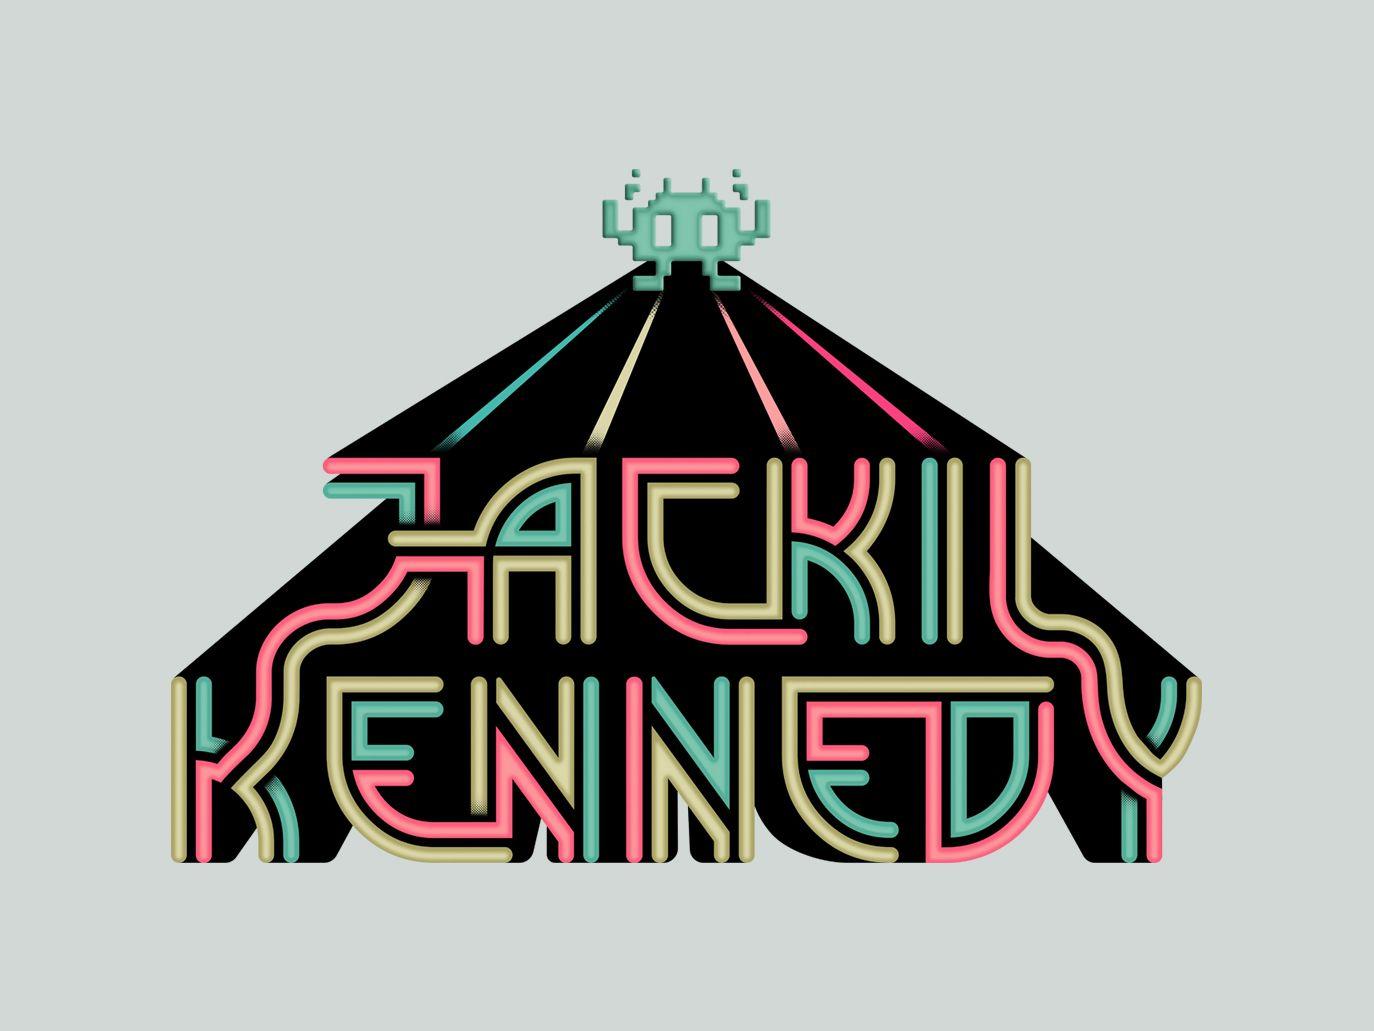 Kennedy Logo - Jackii Kennedy Logo by Kirstin Bencomo | Dribbble | Dribbble